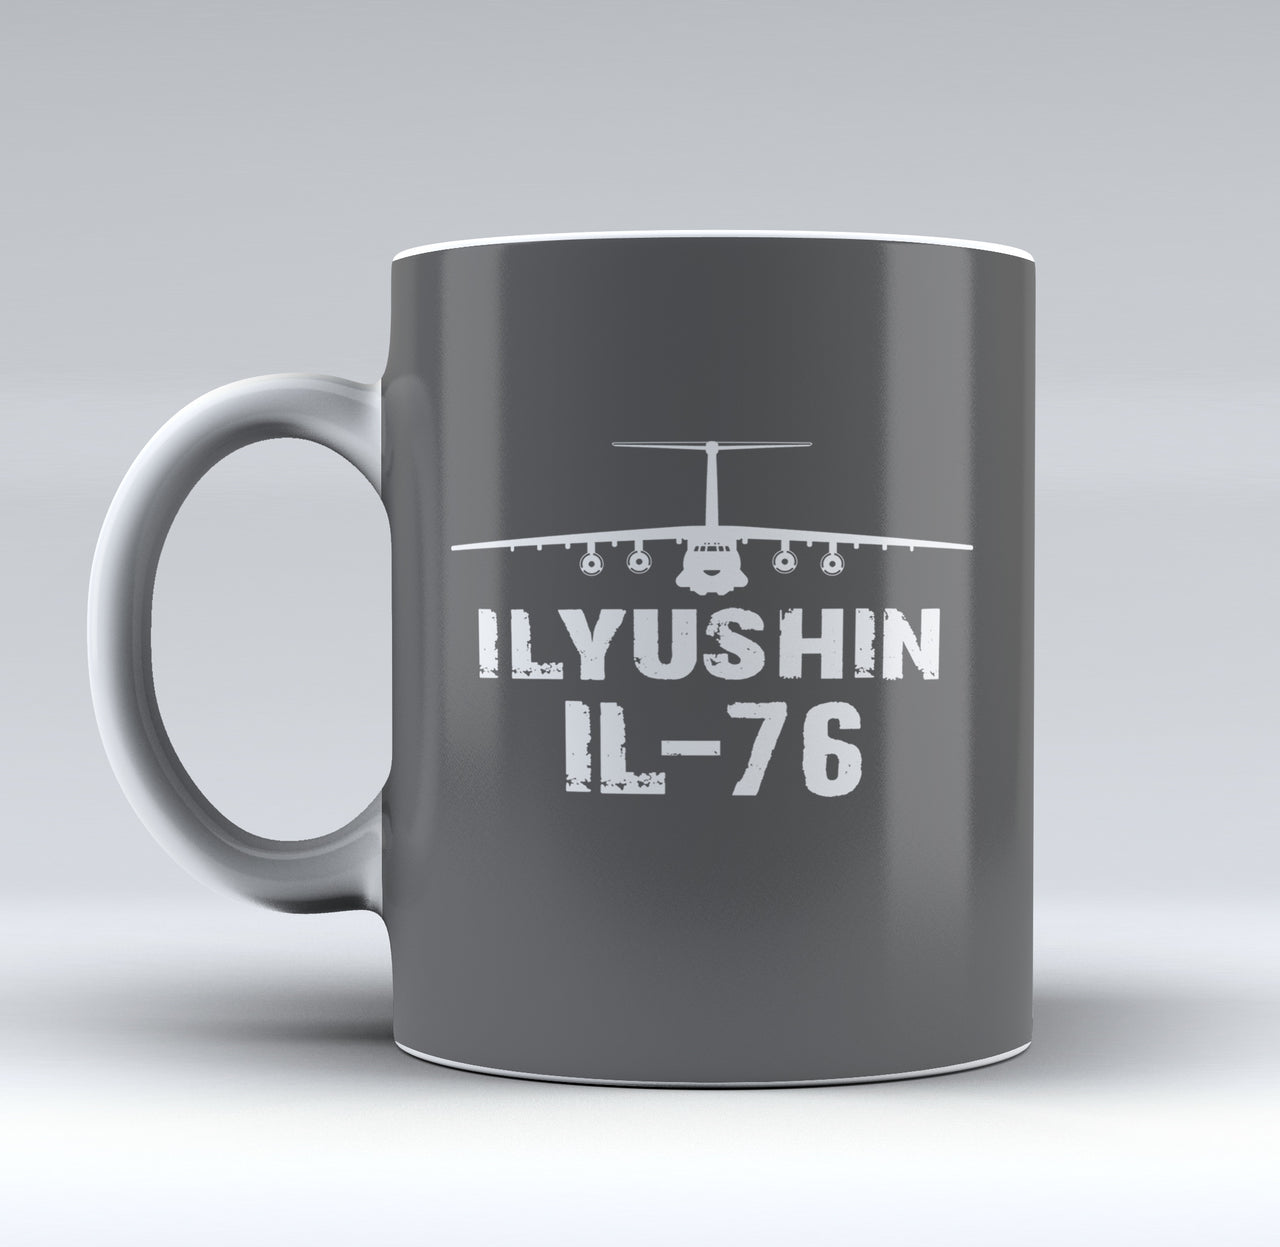 ILyushin IL-76 & Plane Designed Mugs